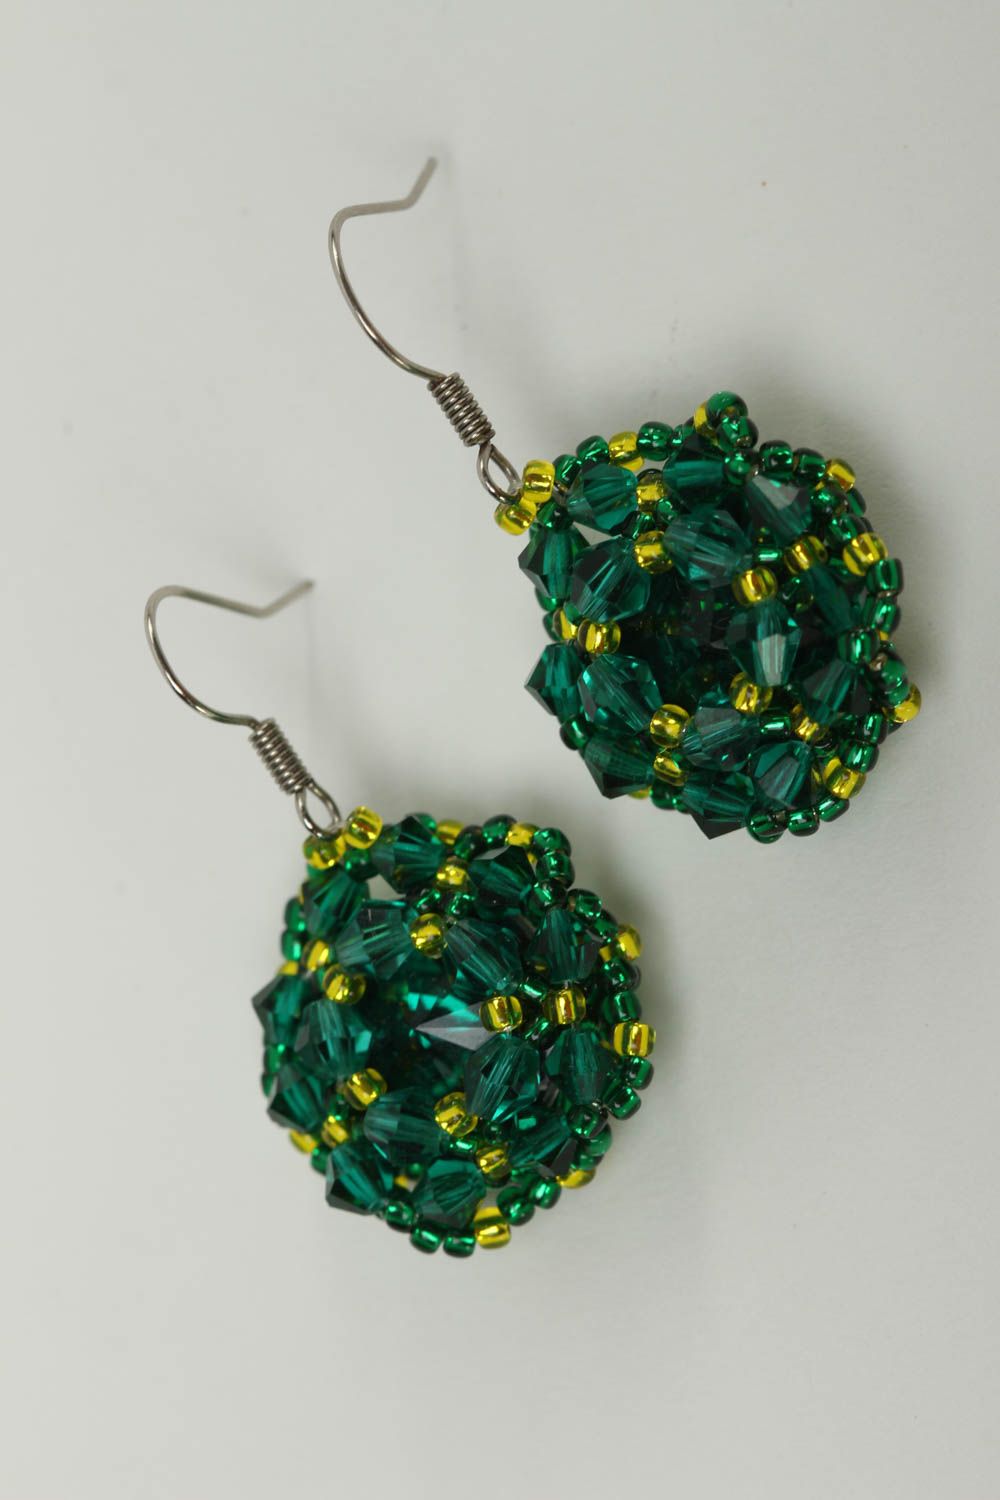 Handmade seed beads earrings green earrings evening accessories stylish jewelry photo 2